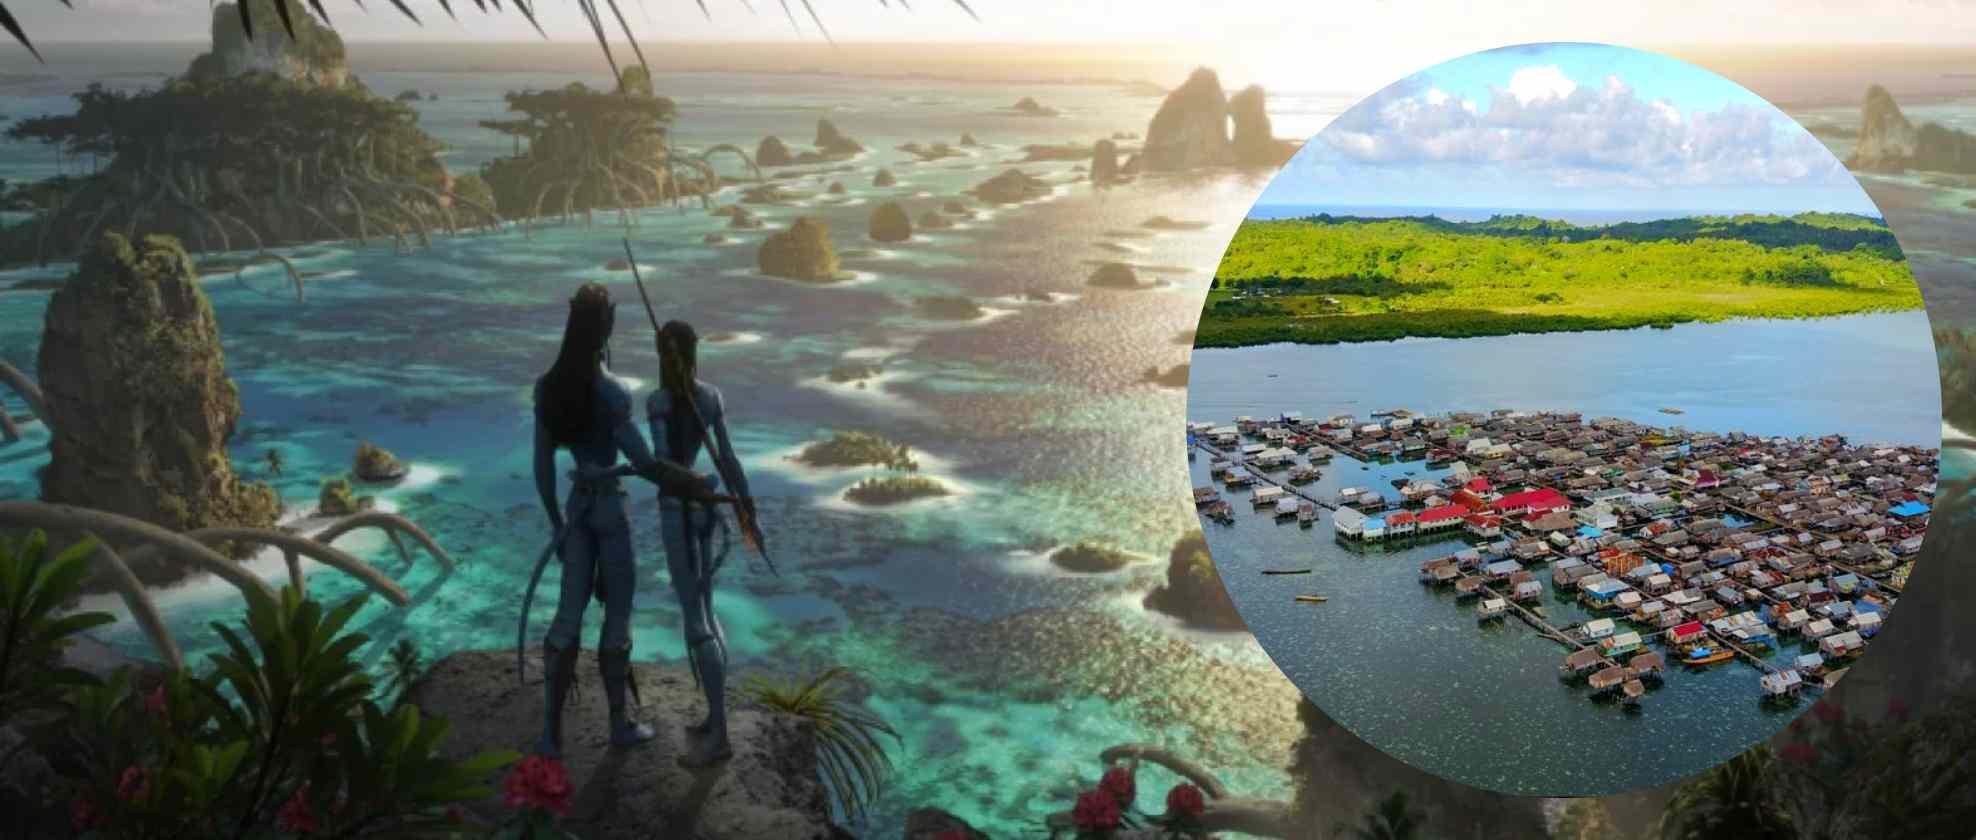 01 Melihat Eksotisme Kehidupan Suku Bajo, Inspirasi Film Avatar 2.jpg